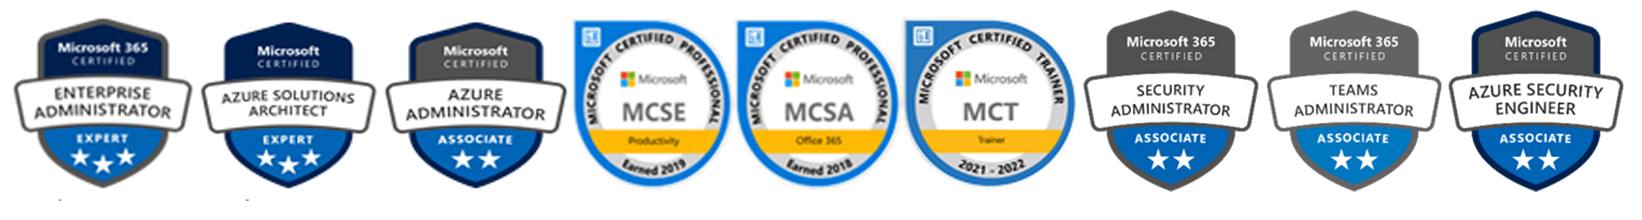 Microsoft Certificates